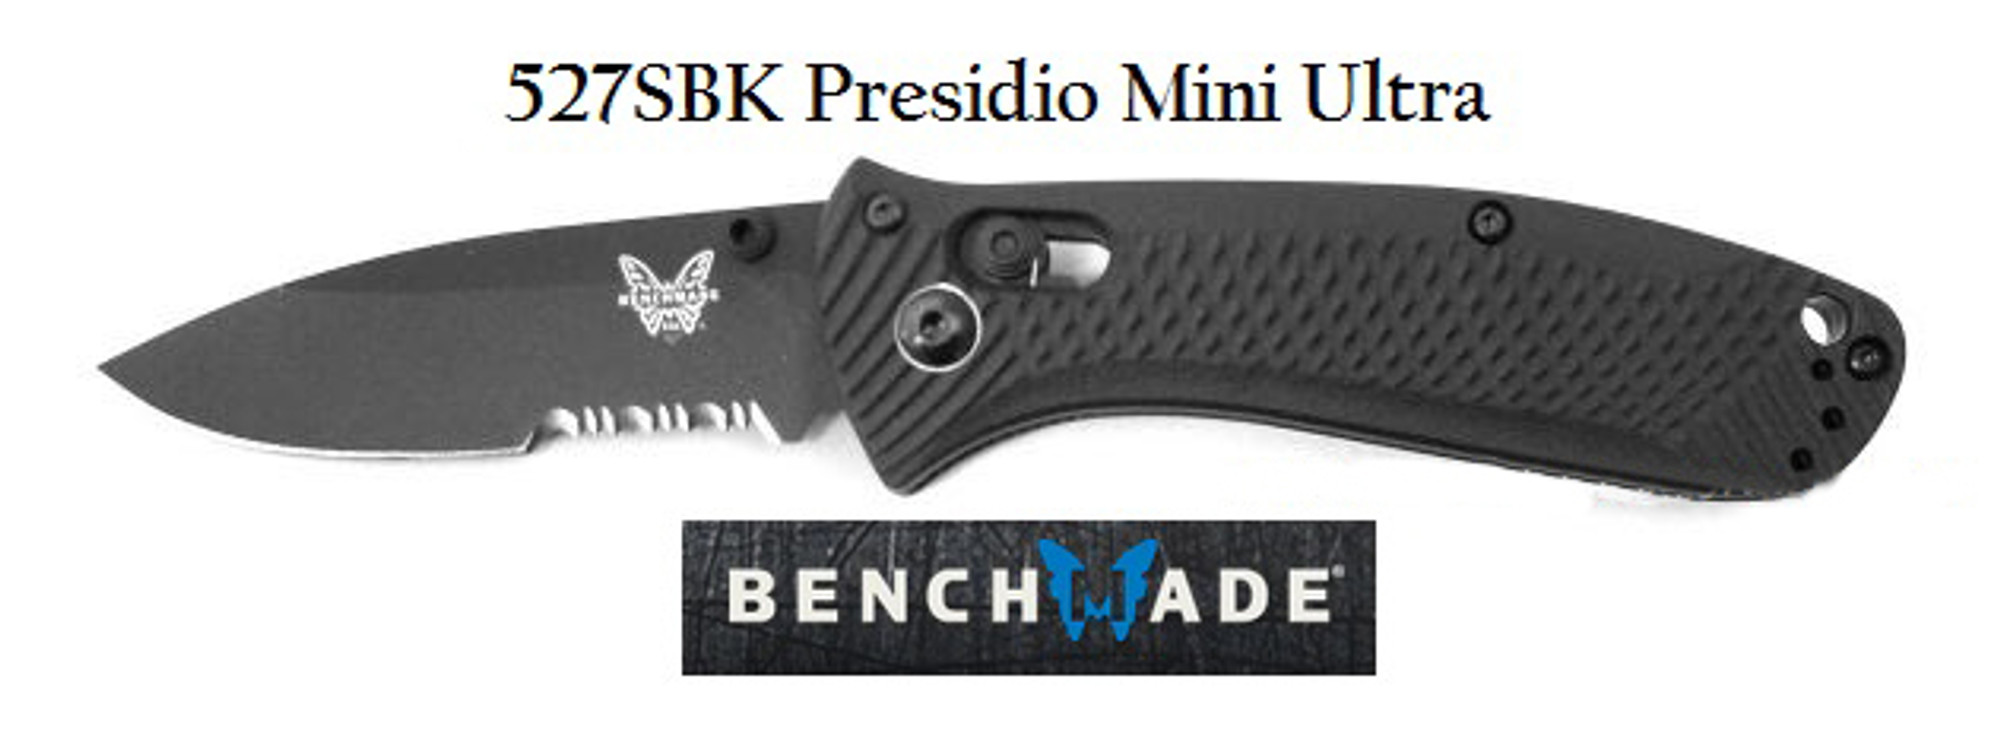 Benchmade Presidio 527SBK Mini Ultra Black W/Serration